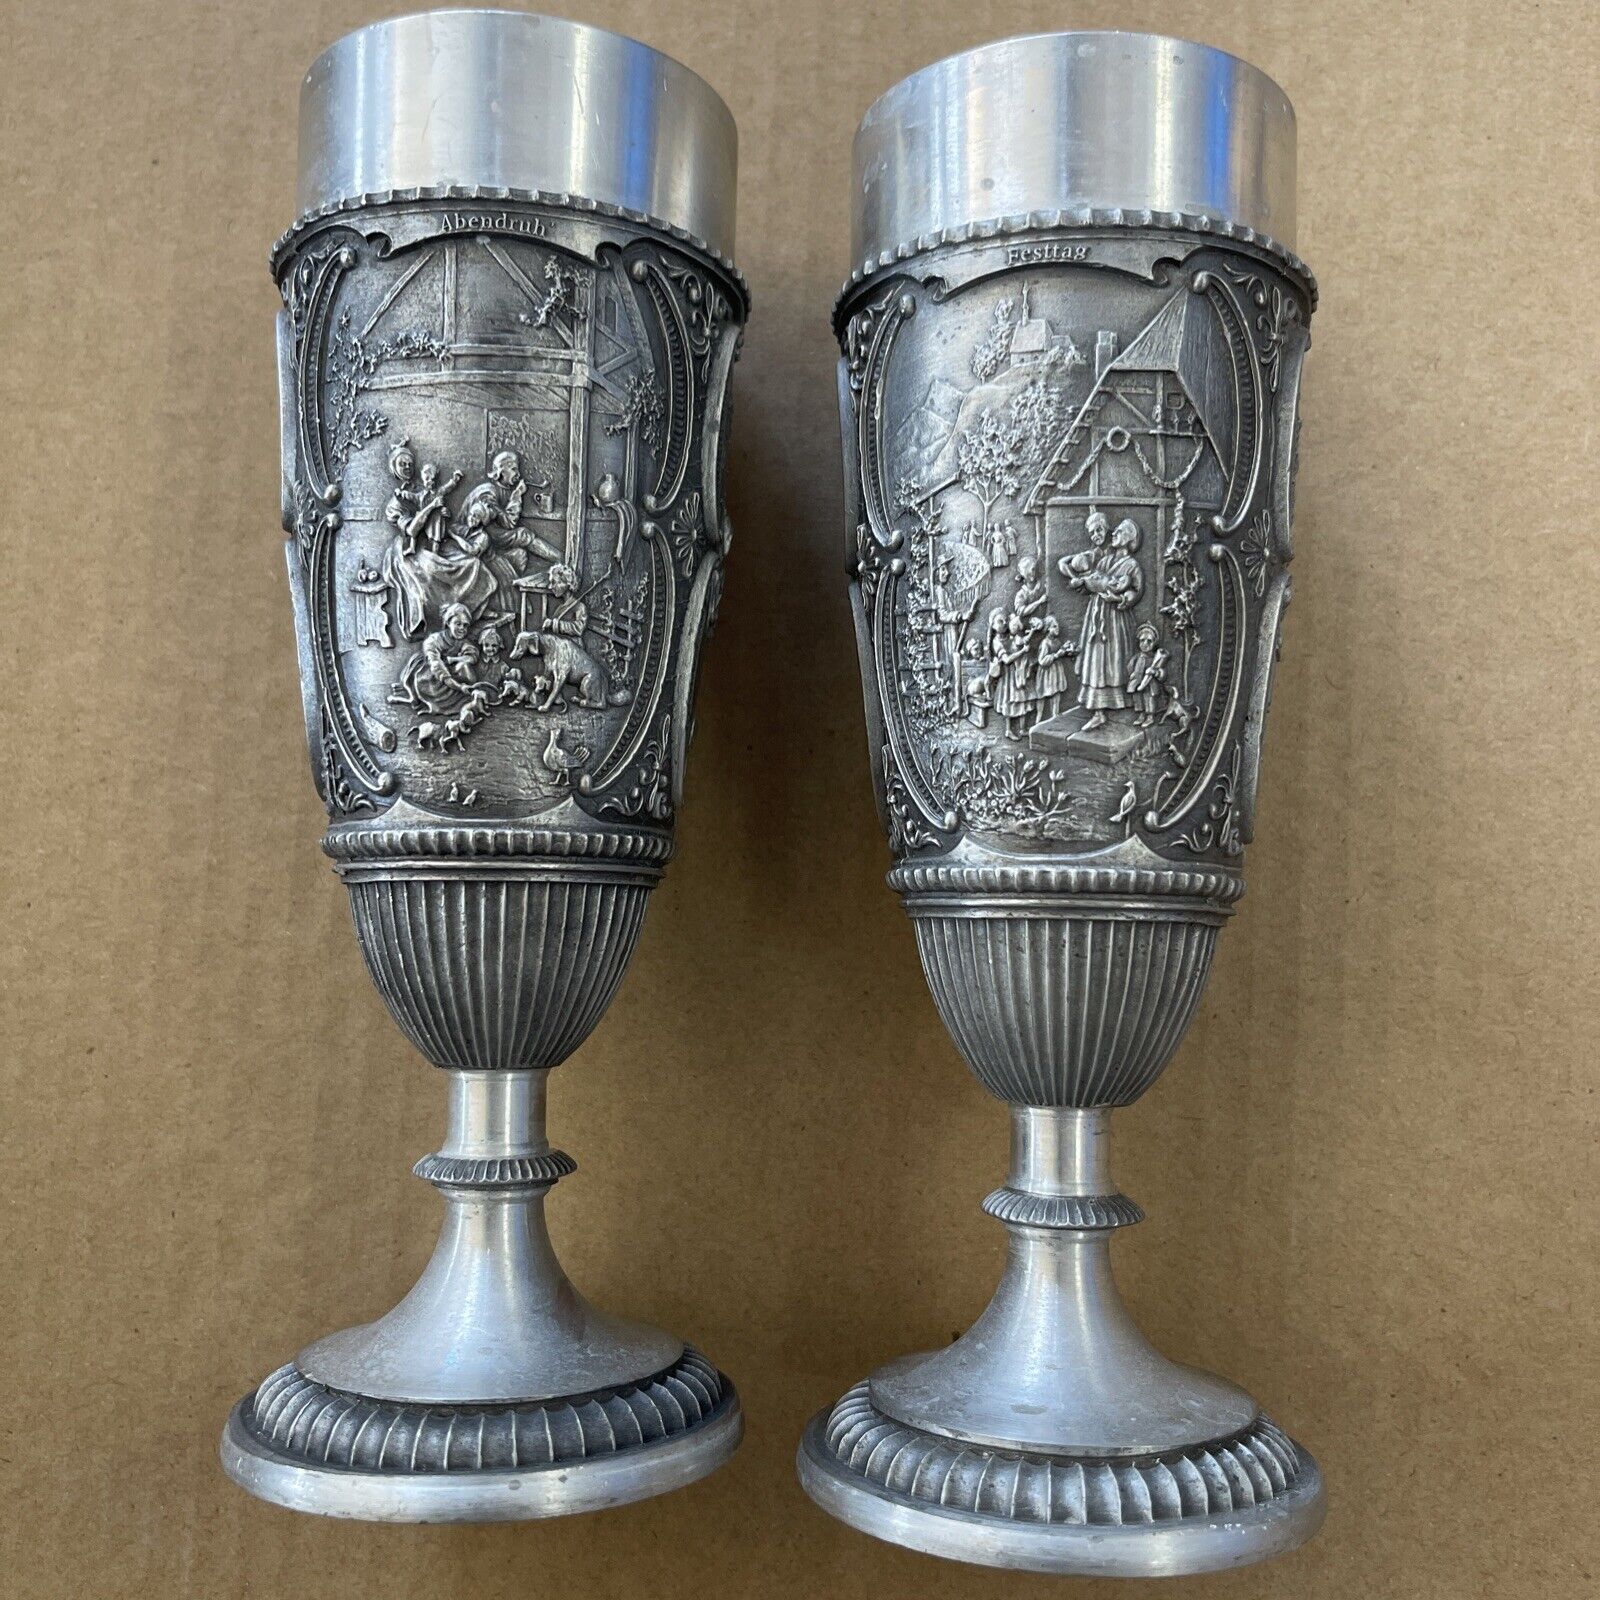 Vintage German Pewter Goblets With Romantic Scenes